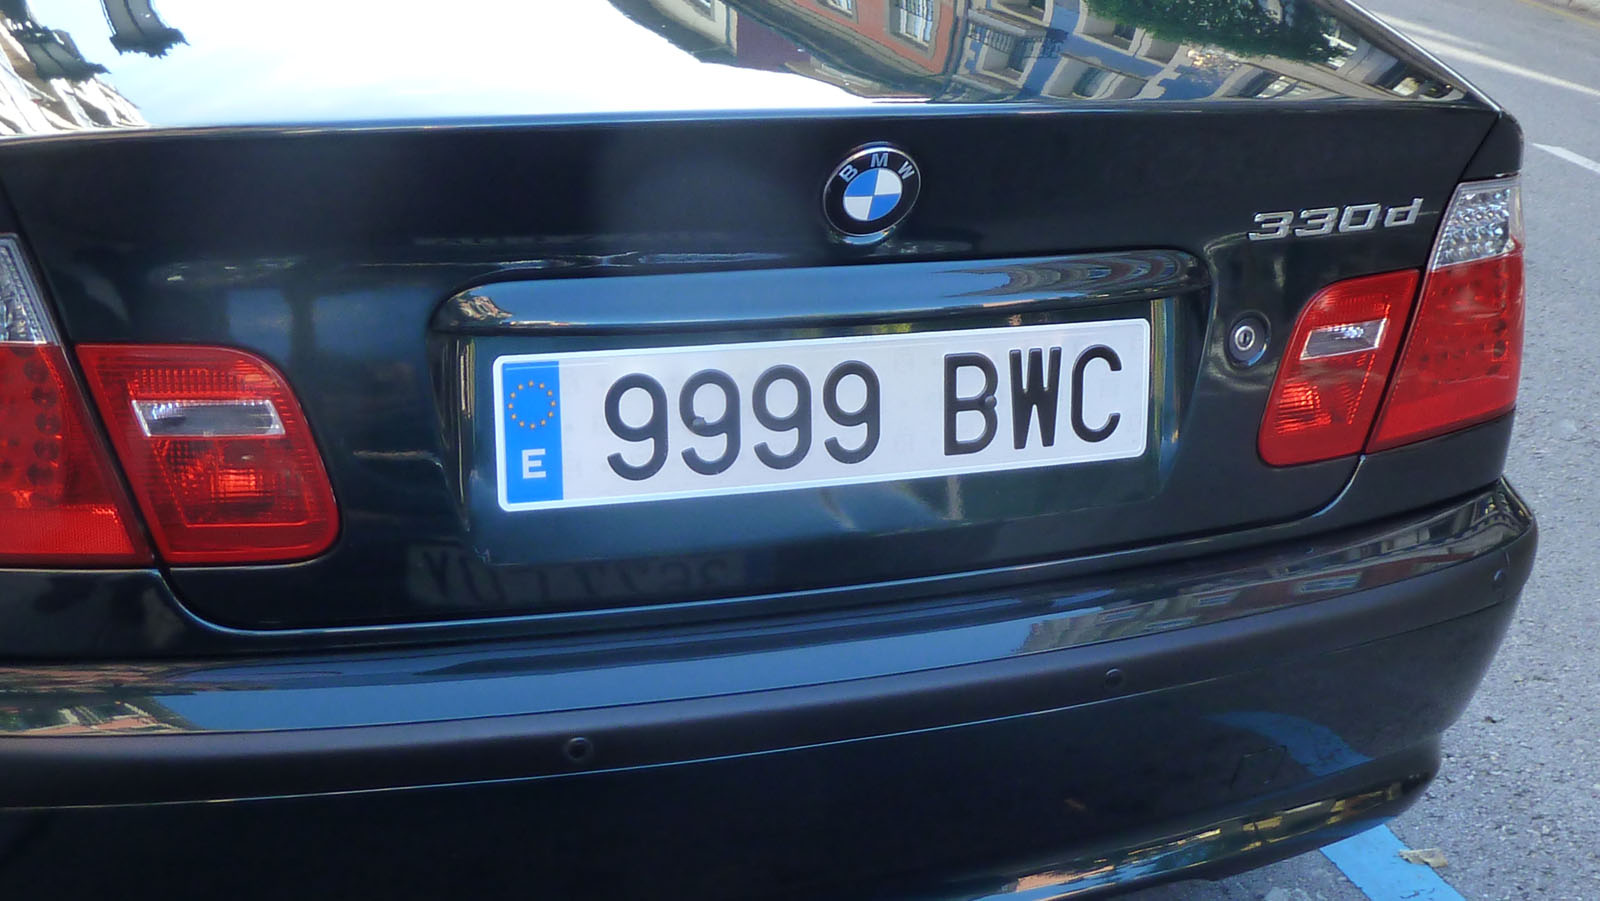 BMW 330d | Flickr - Photo Sharing!